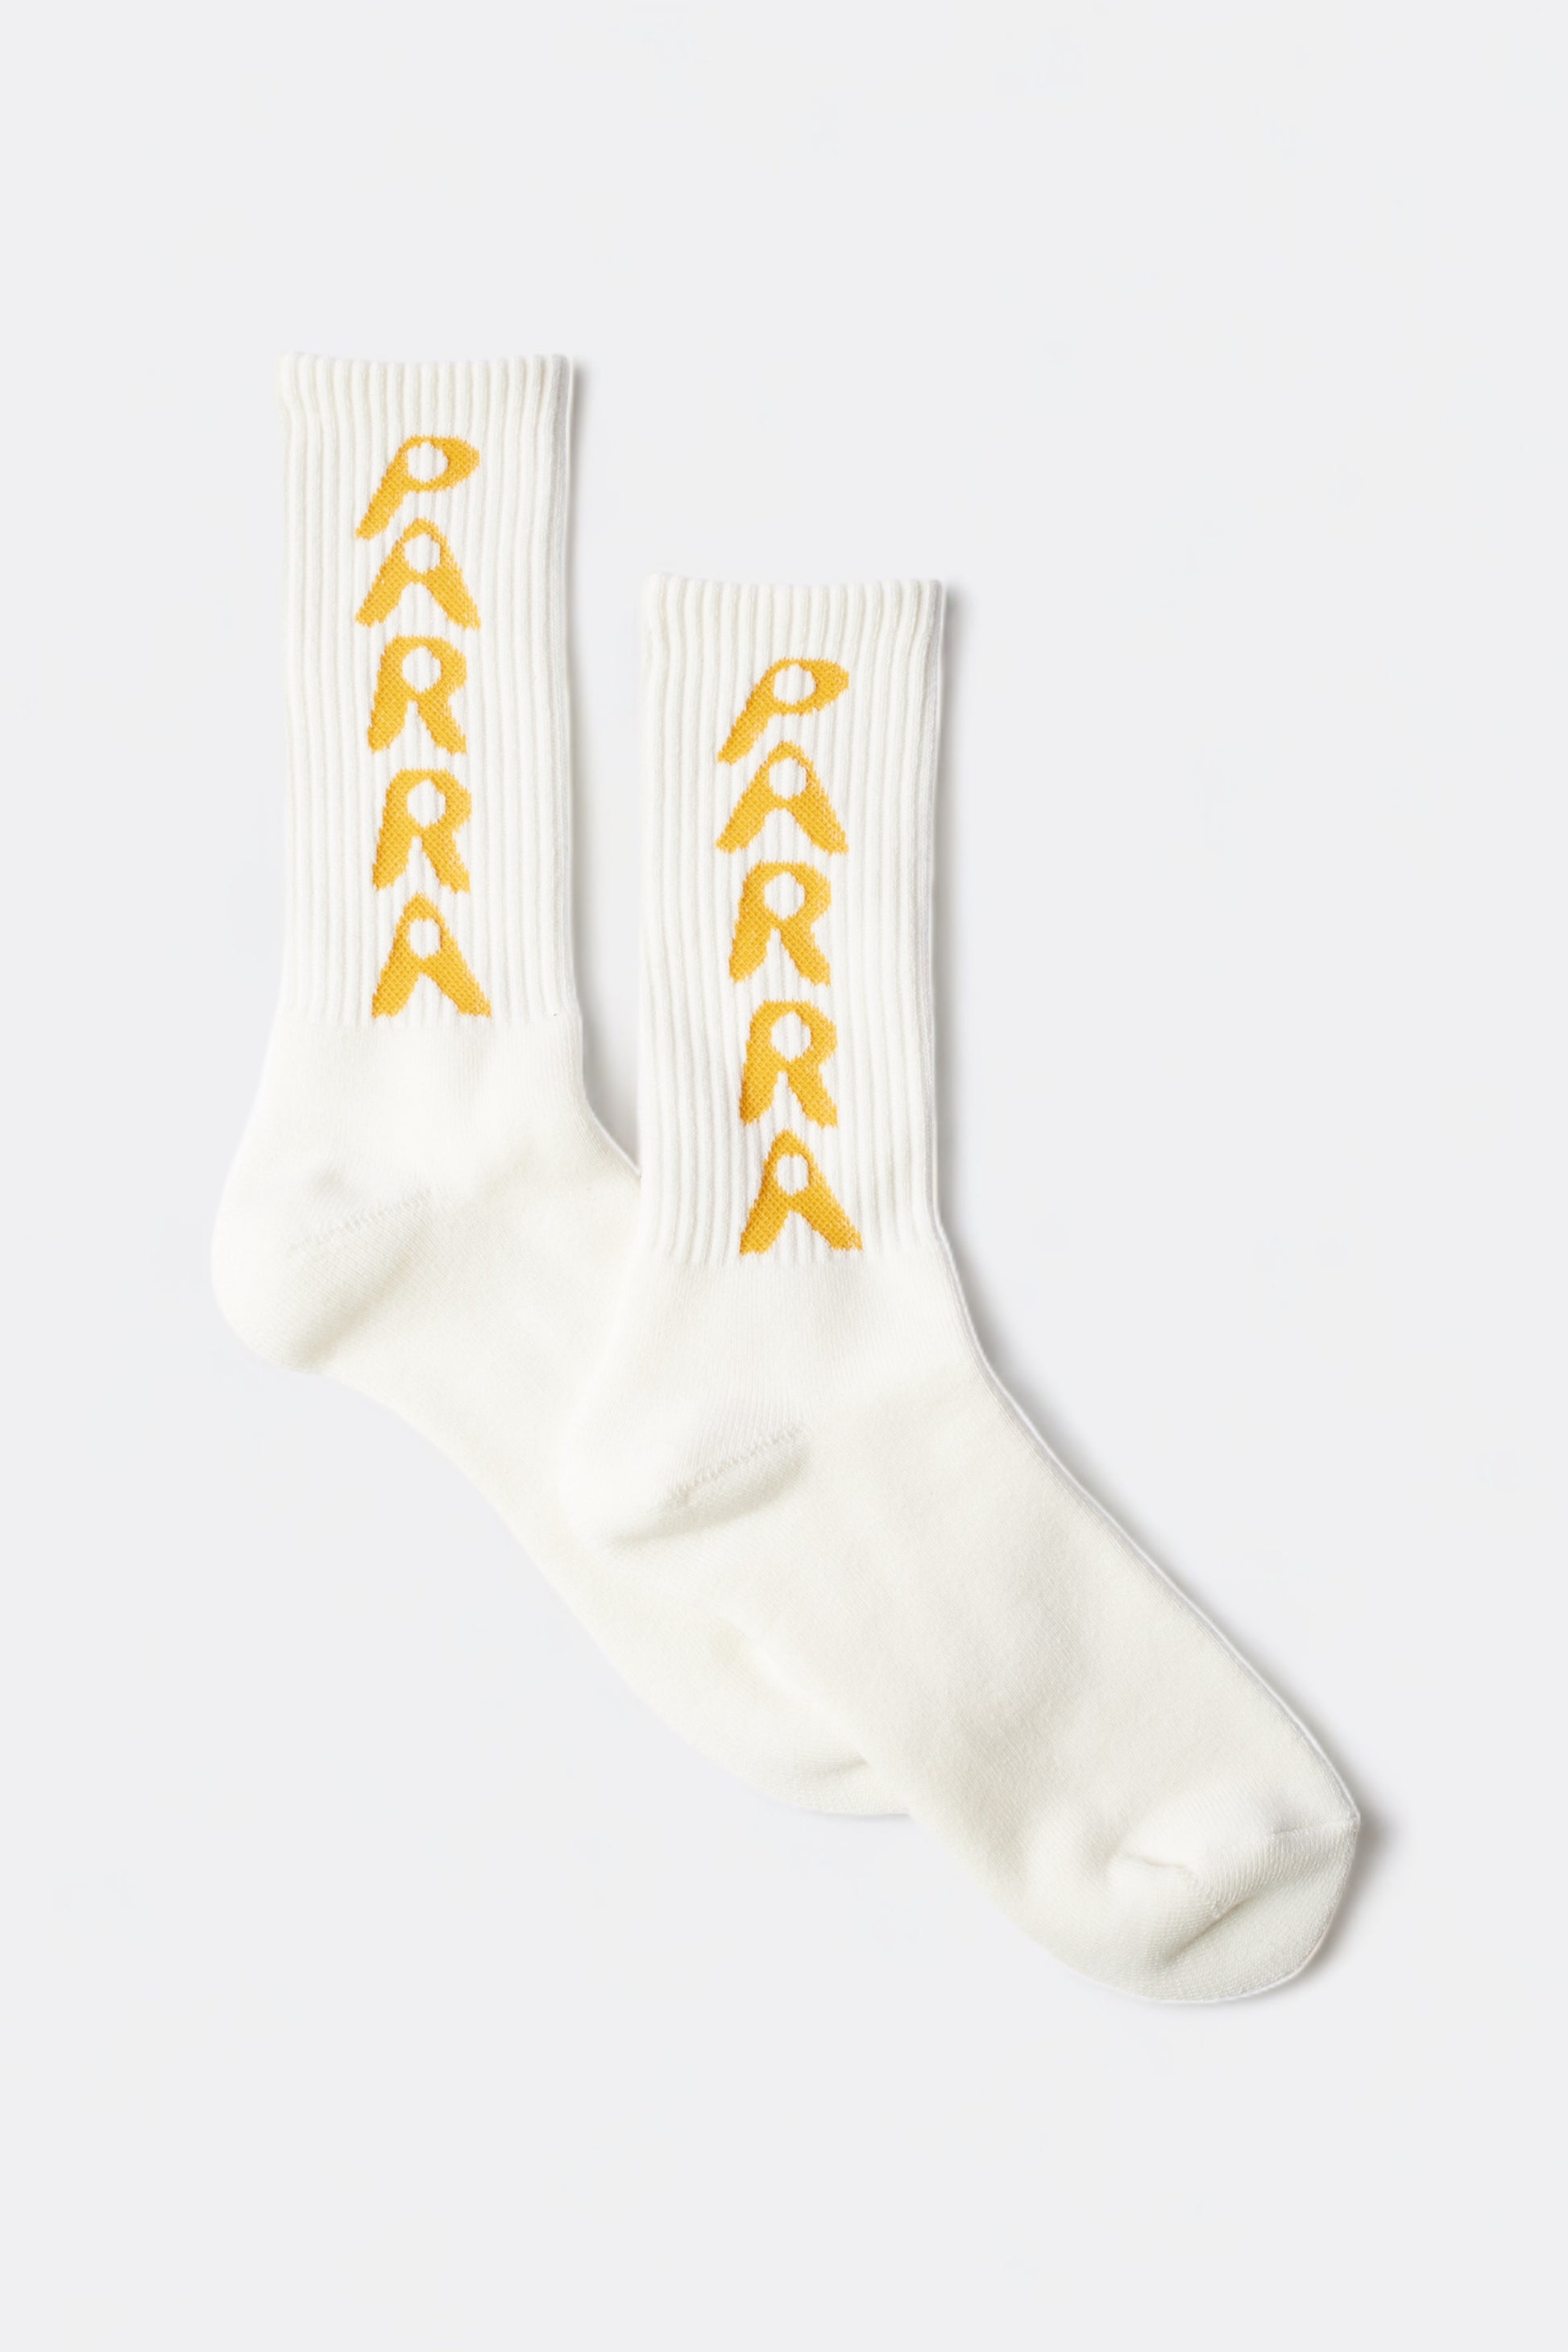 Parra - Hole Logo Crew Socks (White)